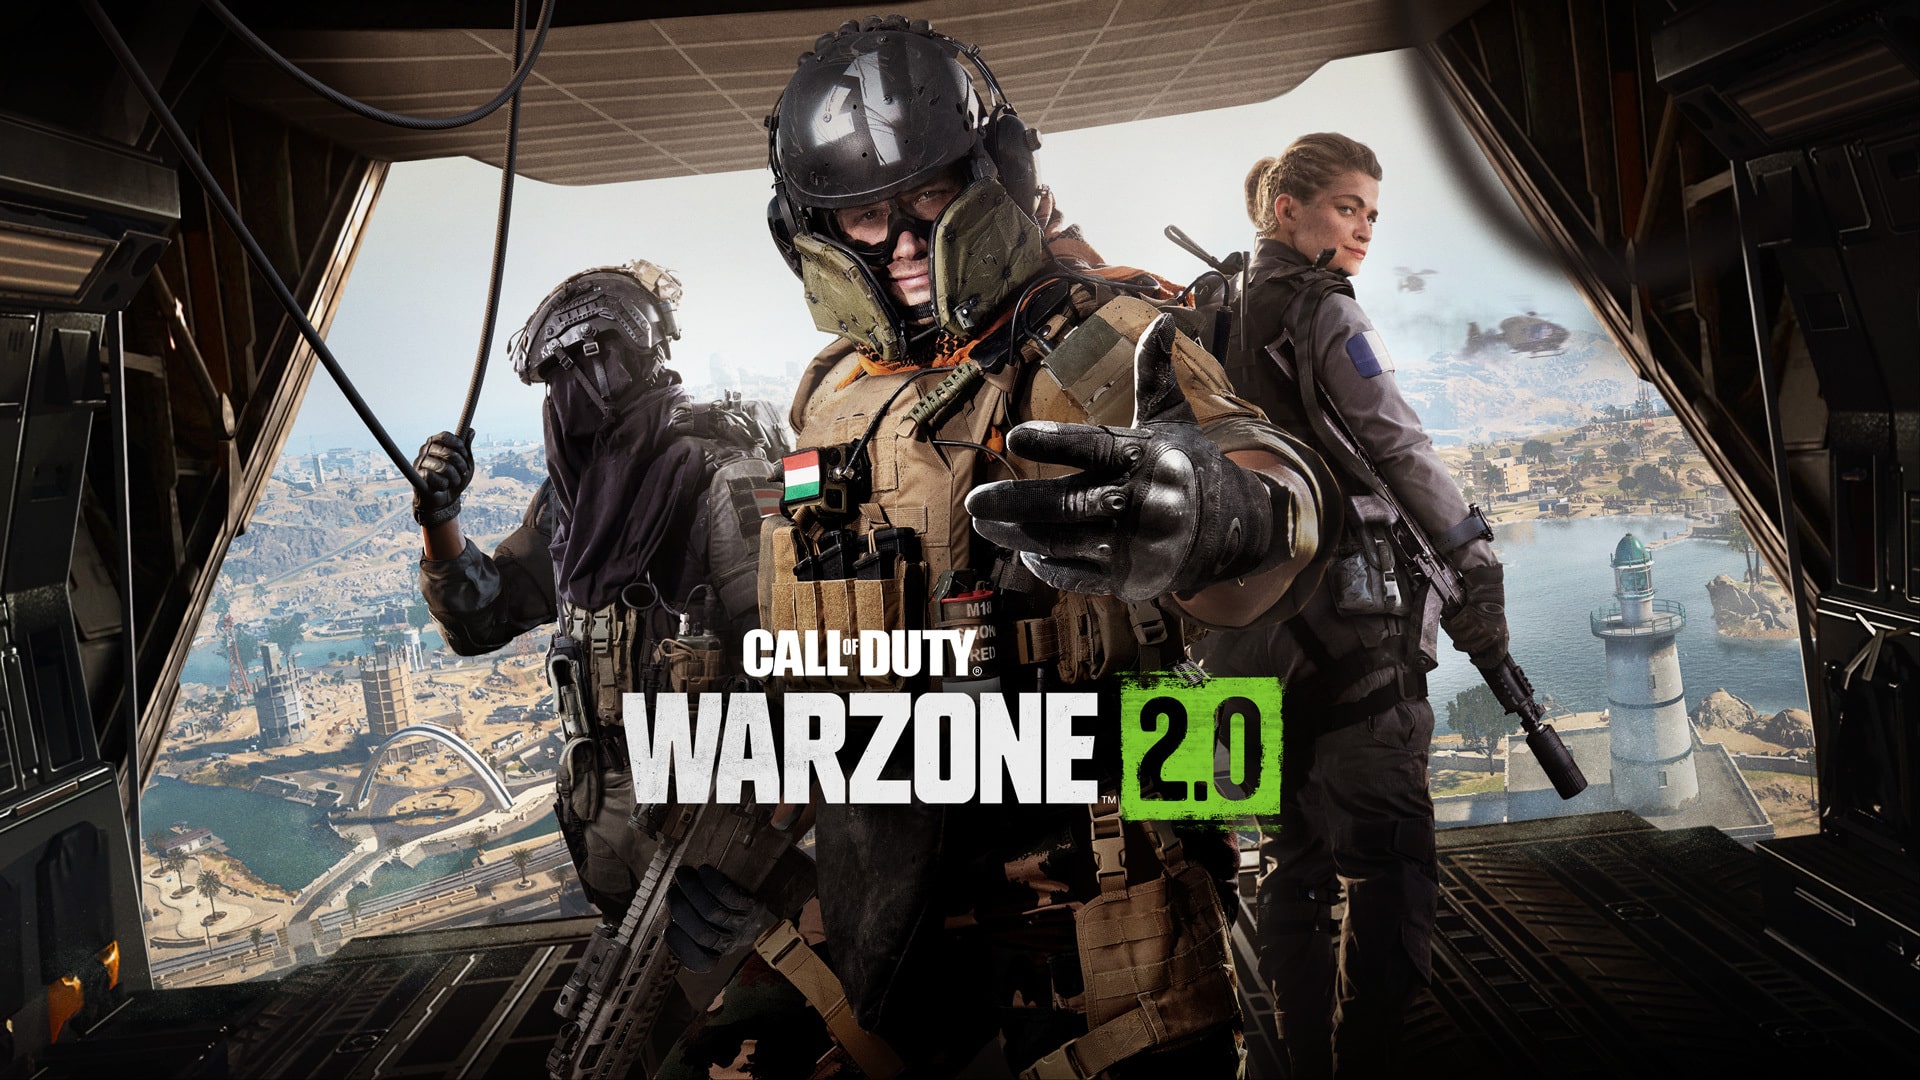 Call of Duty Warzone gameplay scene